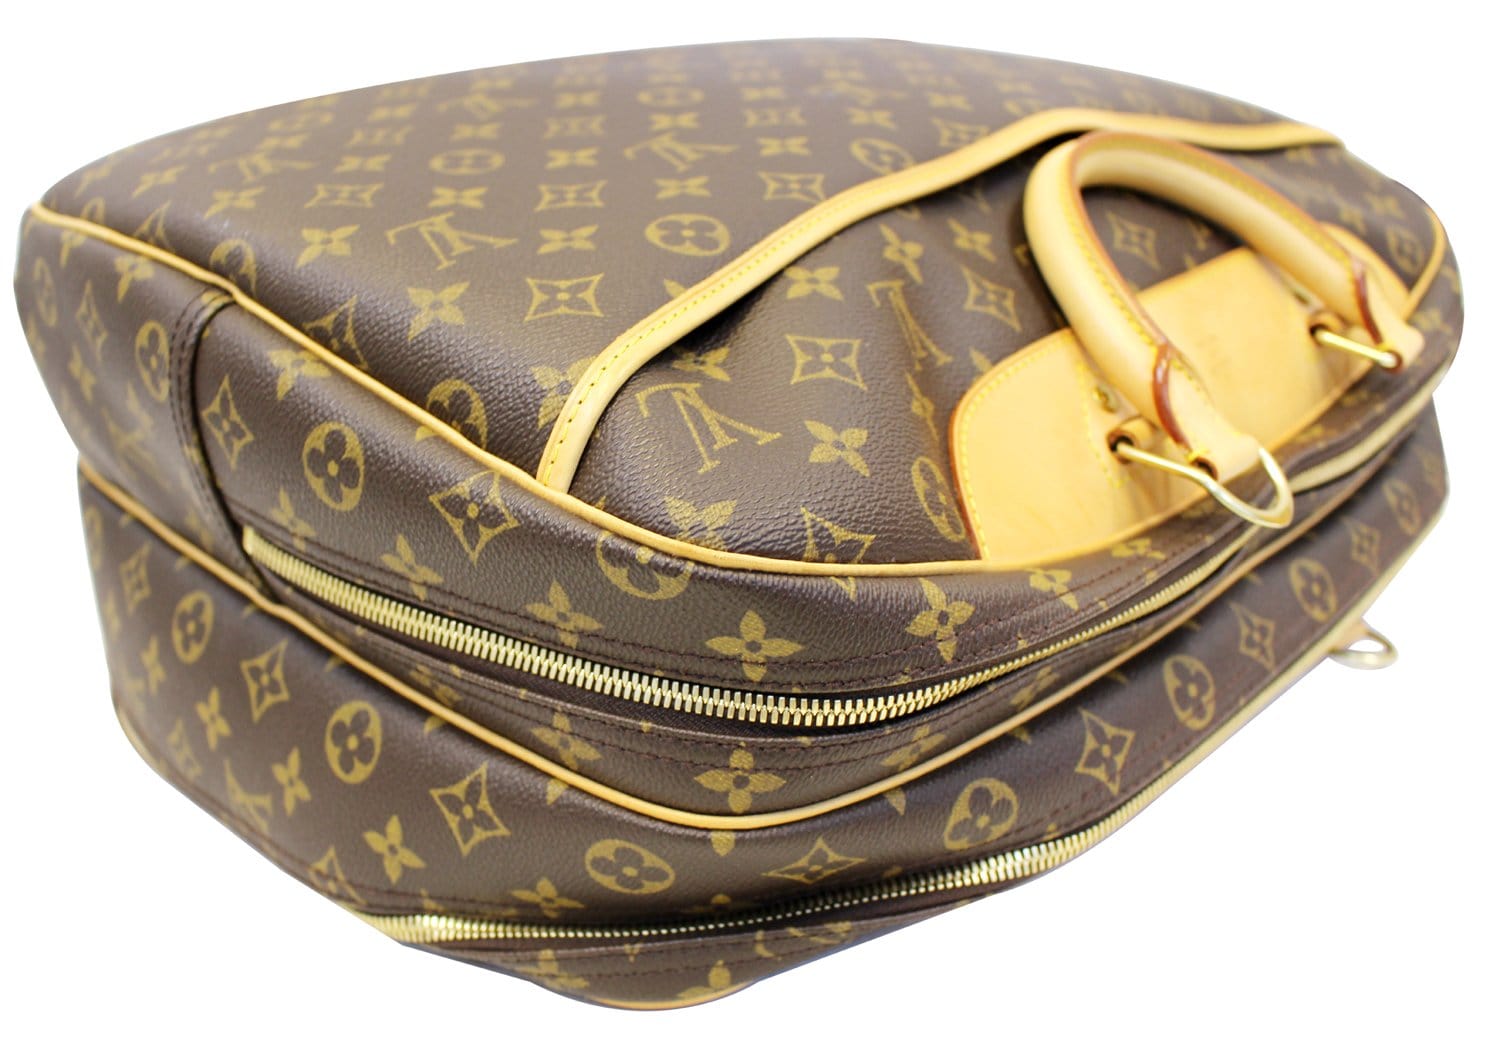 NTWRK - Louis Vuitton Monogram Alize Travel Bag